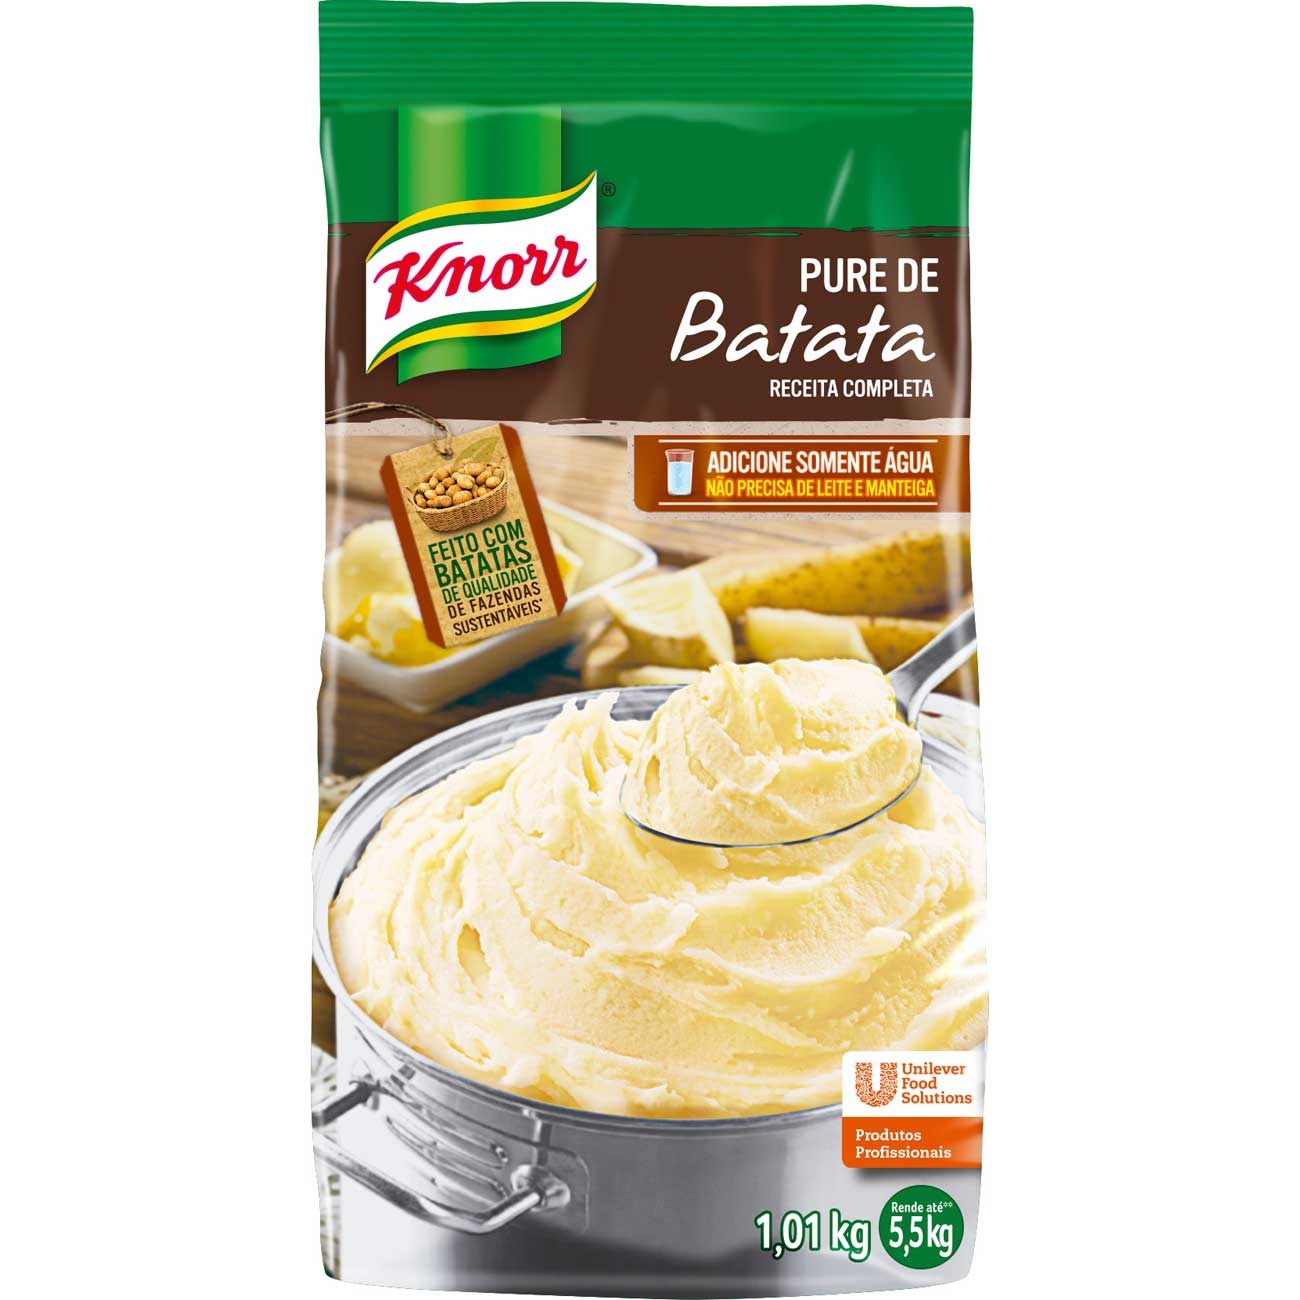 Pur de Batatas Knorr Desidratado 1,01kg